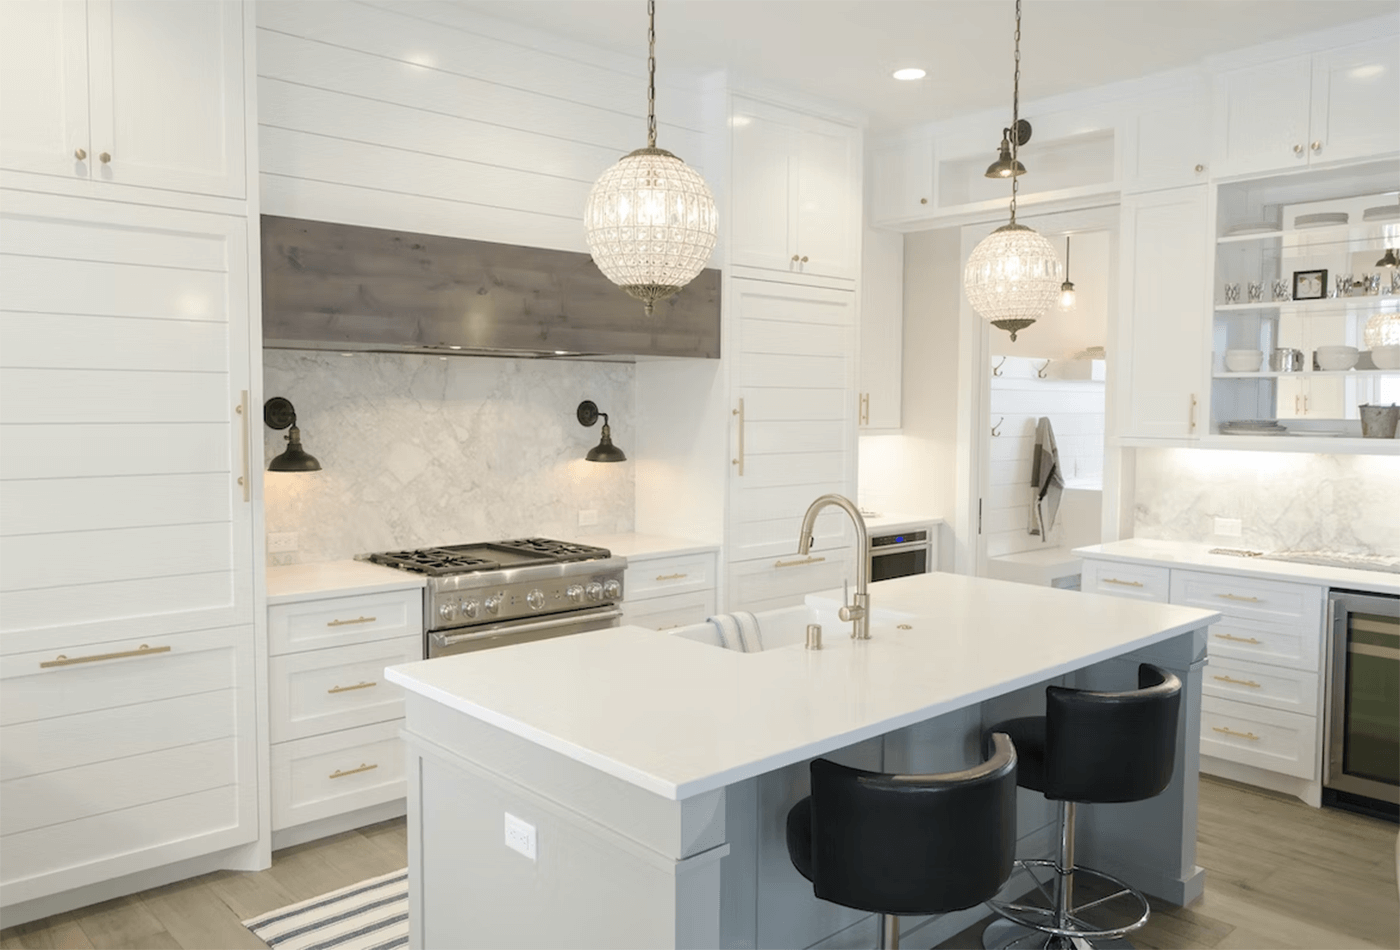 Kitchen Interior Design: Restore It’s Harmony